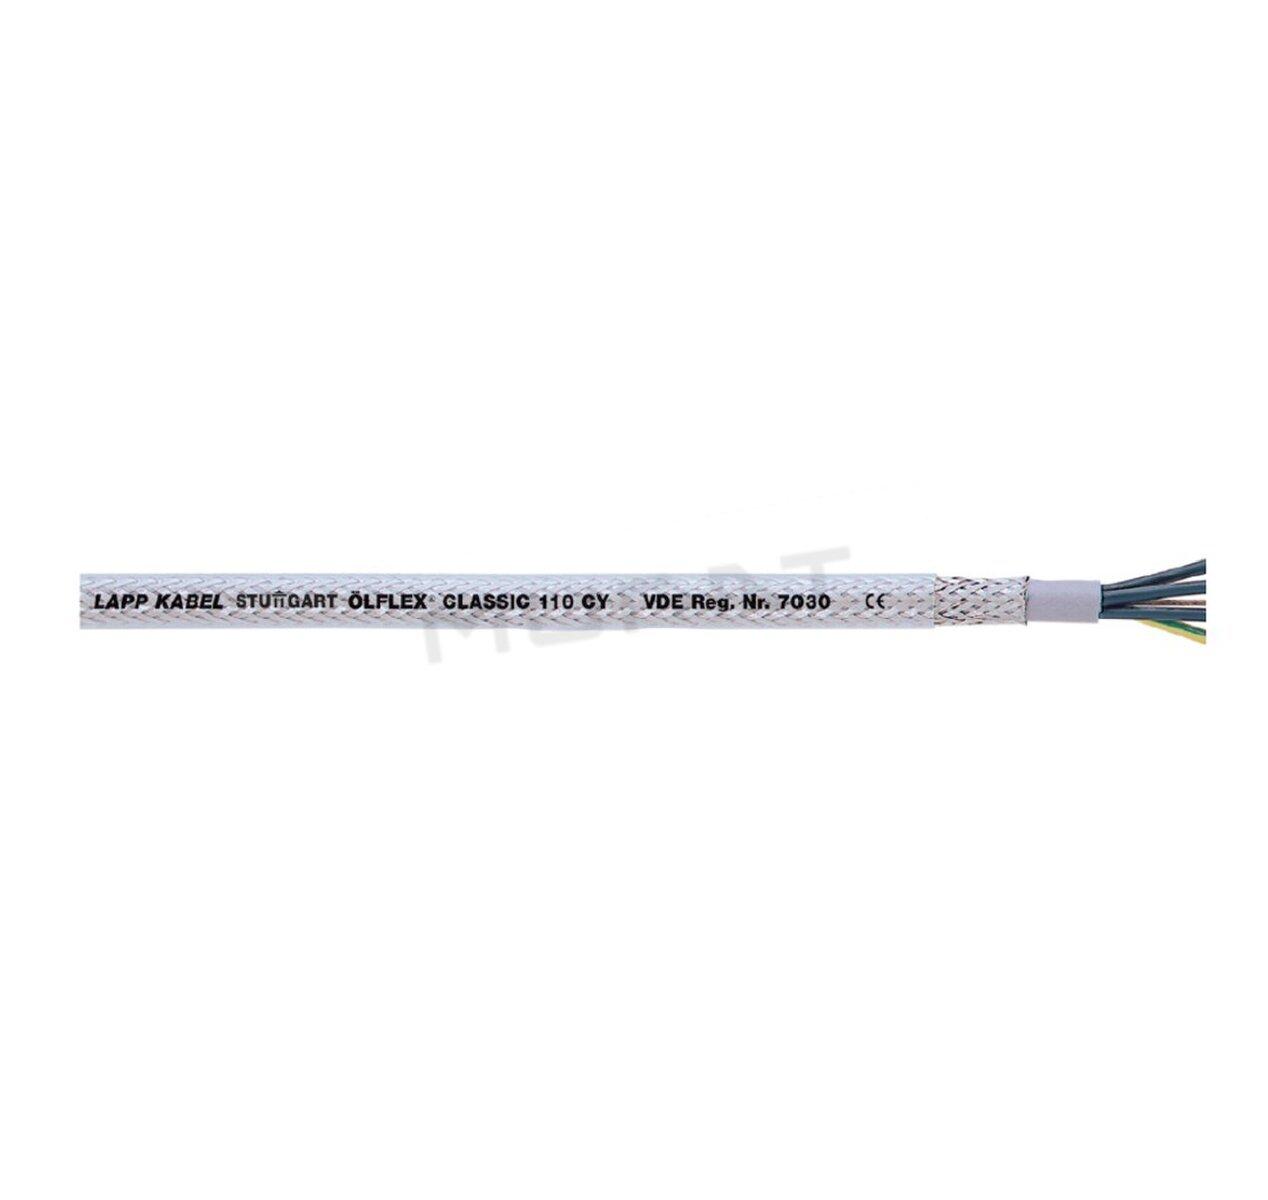 Kábel OLFLEX CLASSIC 110 CY 2X1 mm2